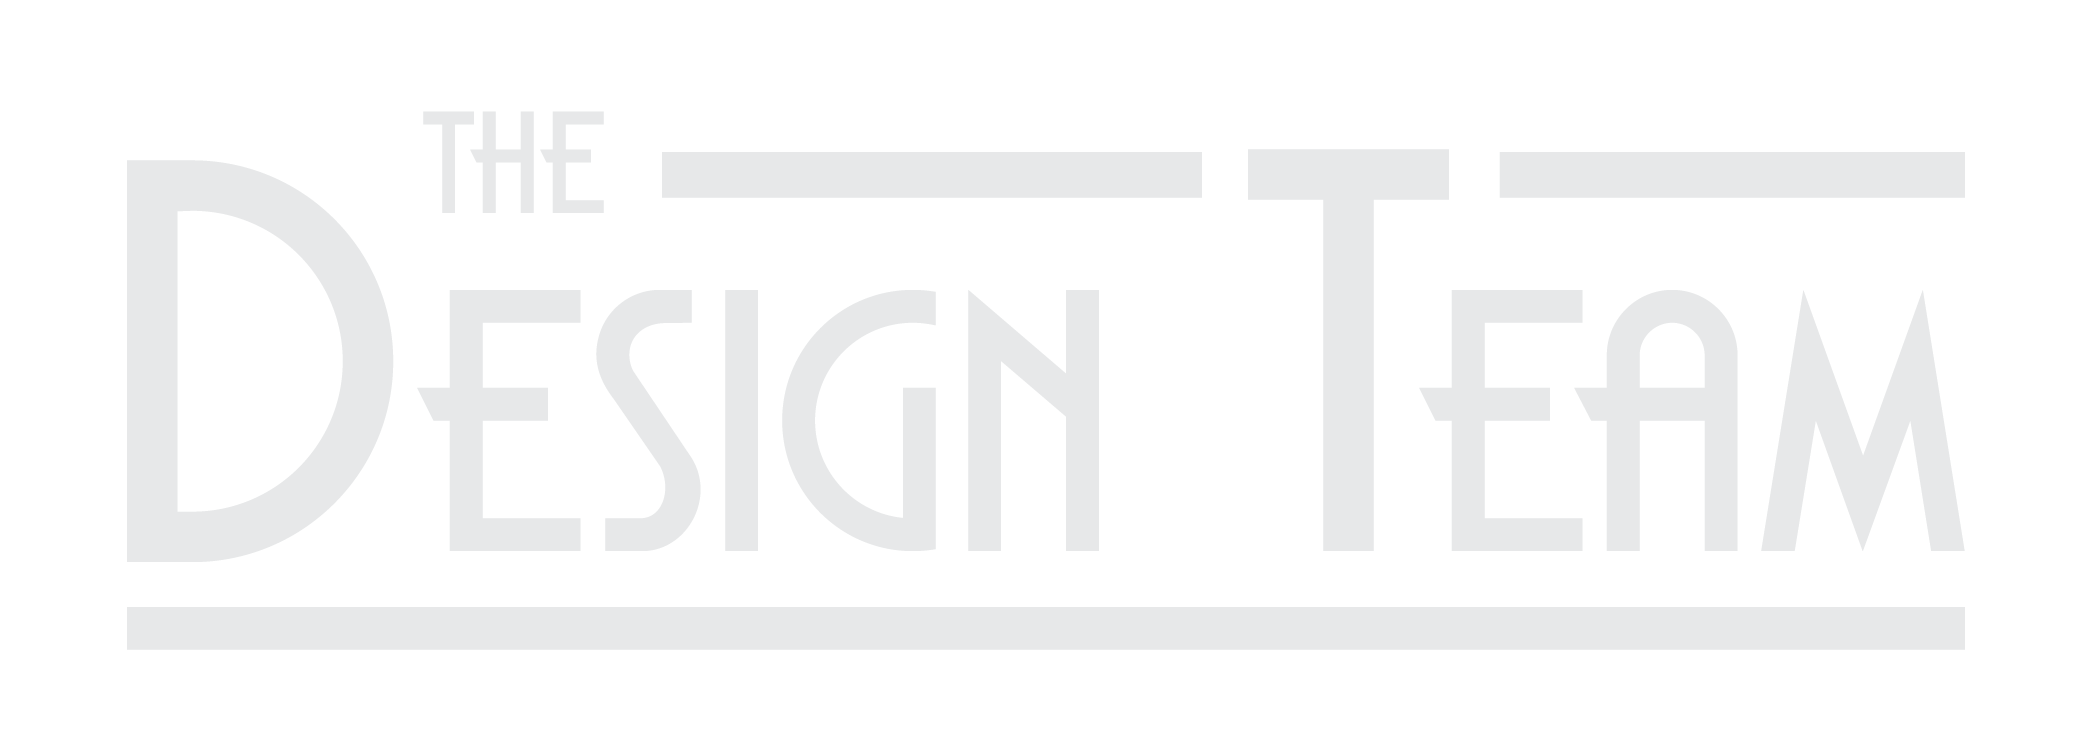 The Design Team - Home Design Specialists